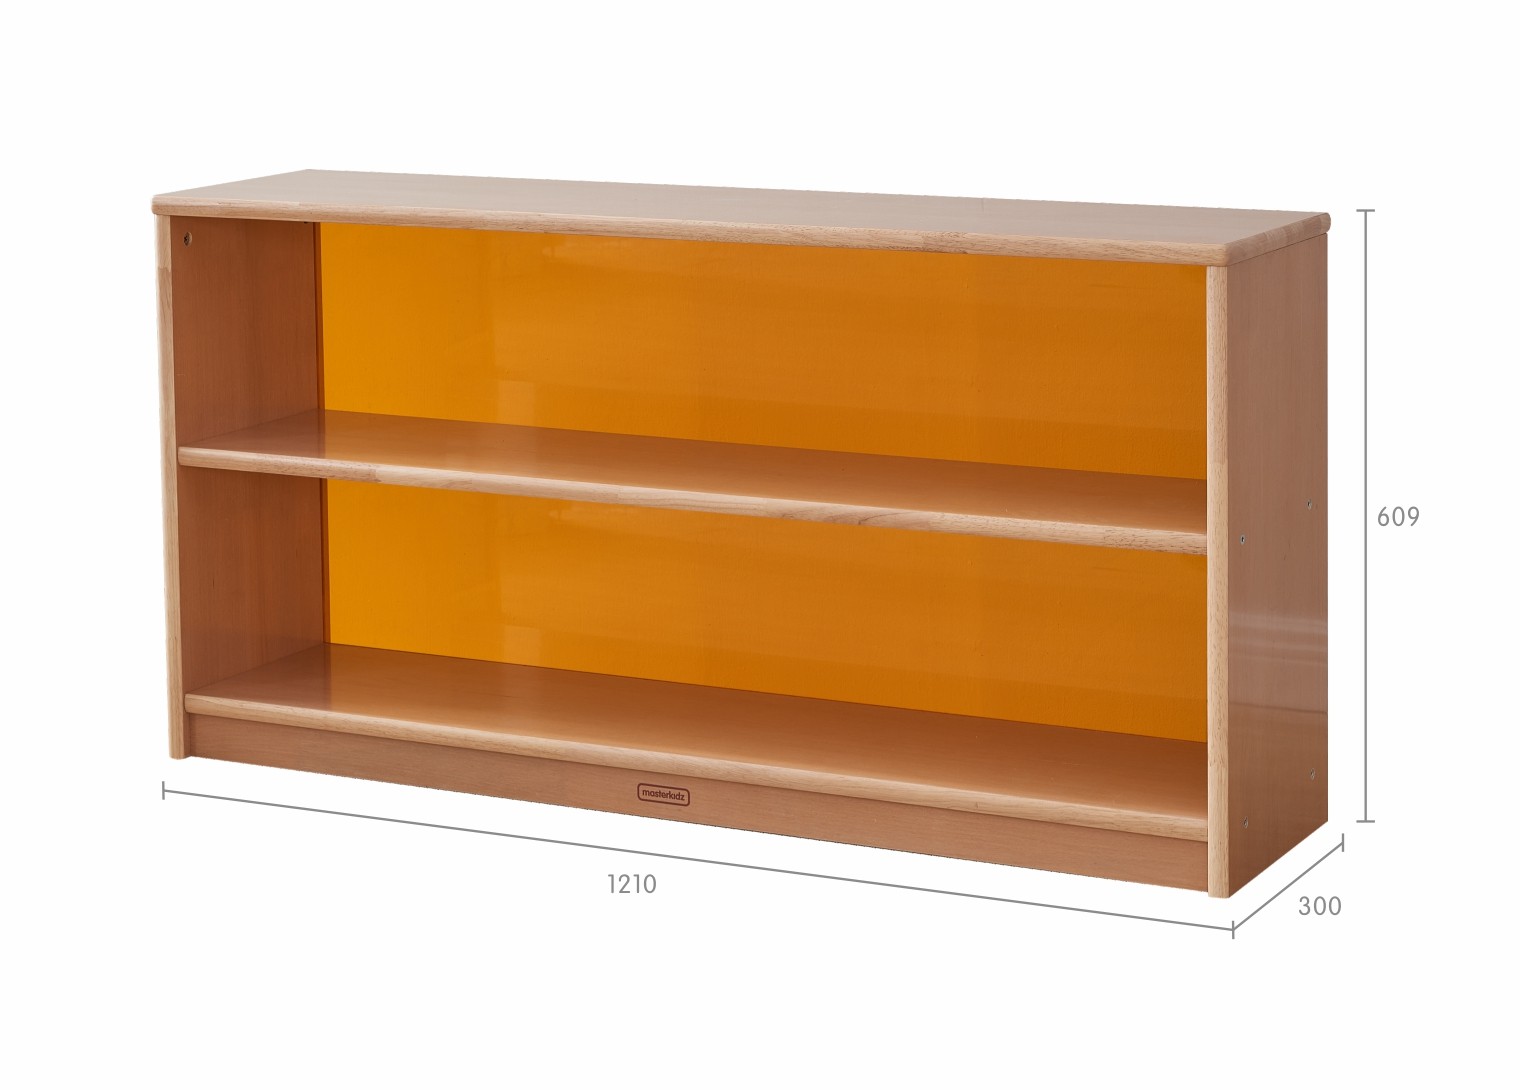 Forest School - 609H x 1210L Wooden  Shelving Unit - Translucent Orange Back